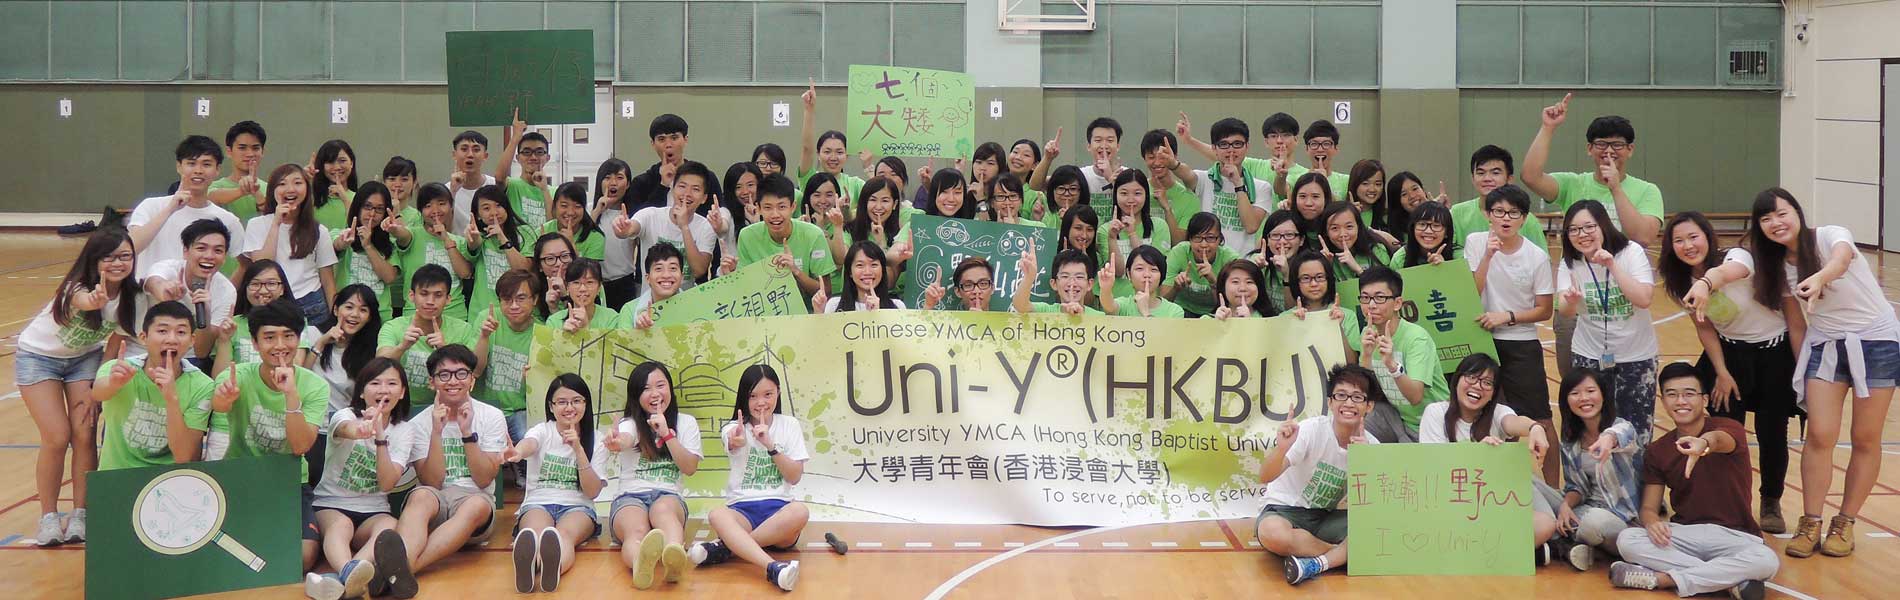 University YMCA - Hong Kong Baptist University Photo